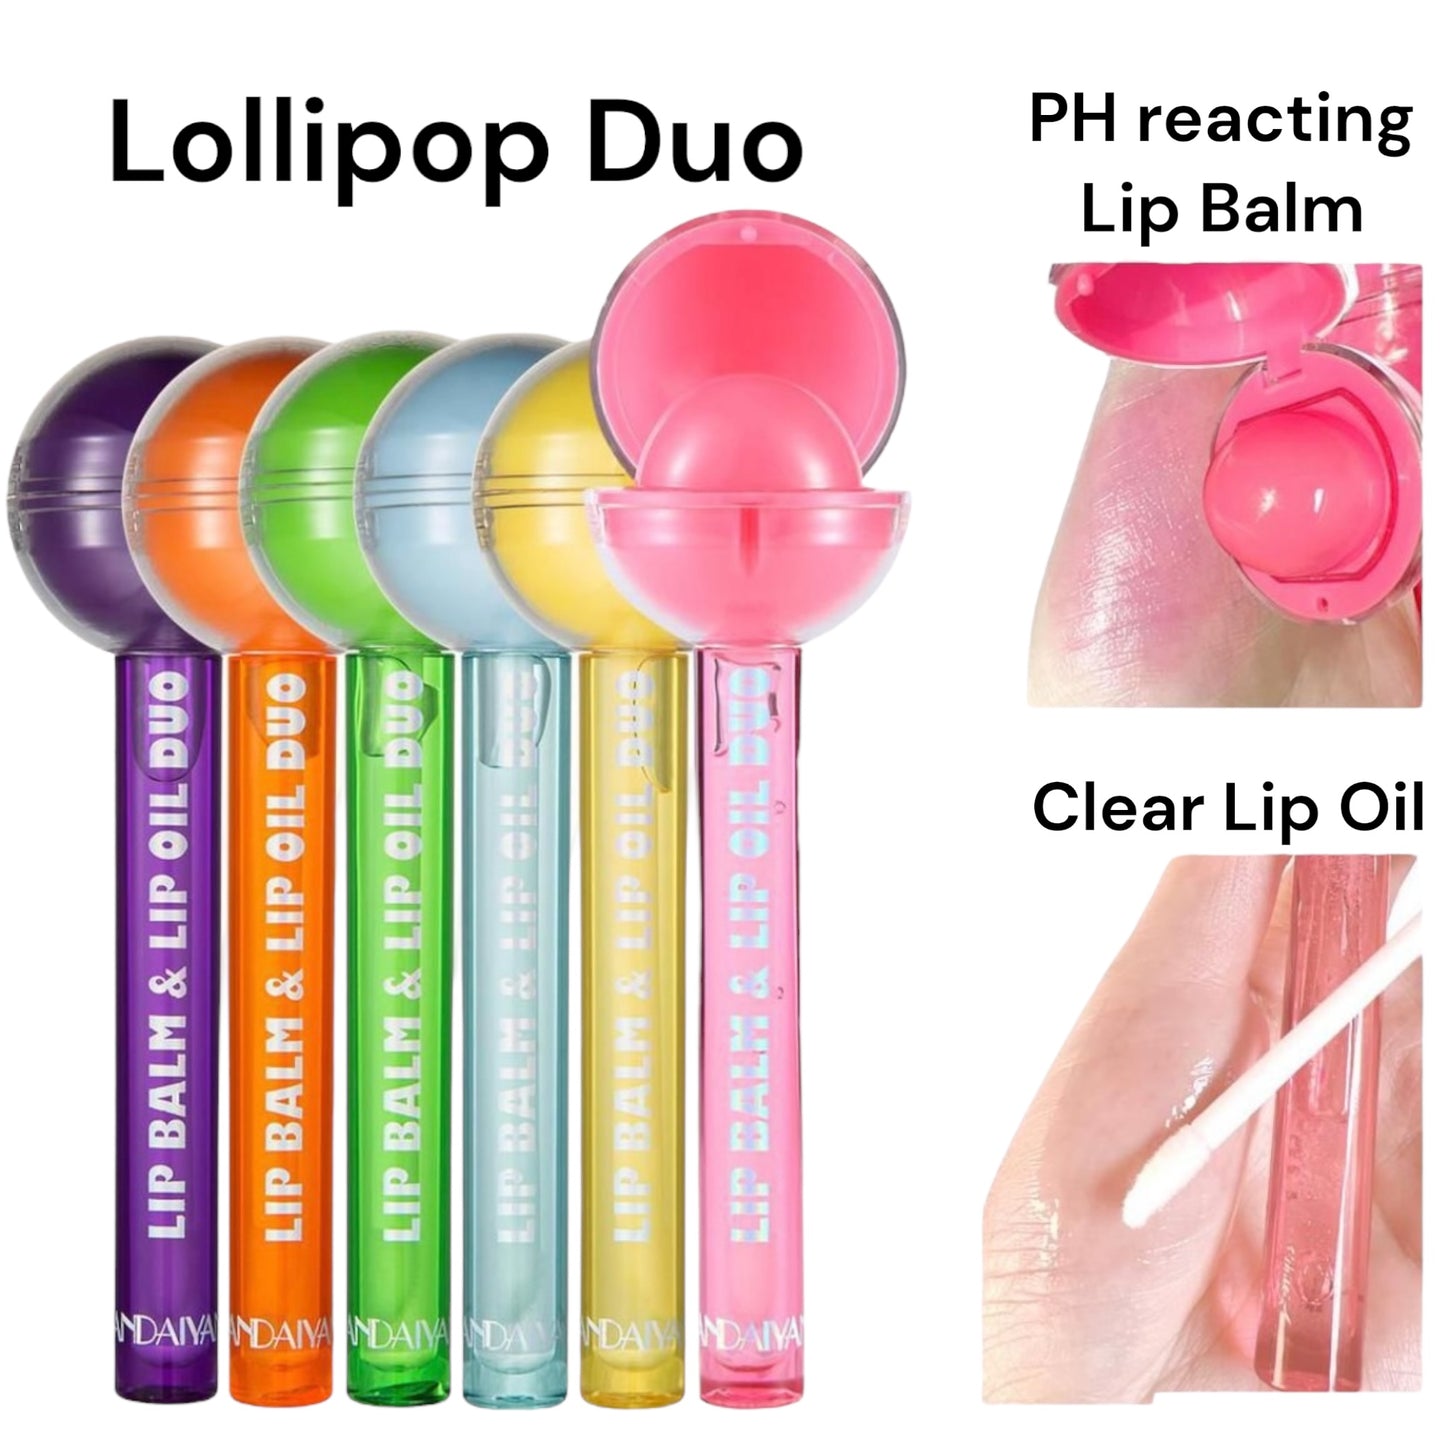 Lollipop Duo